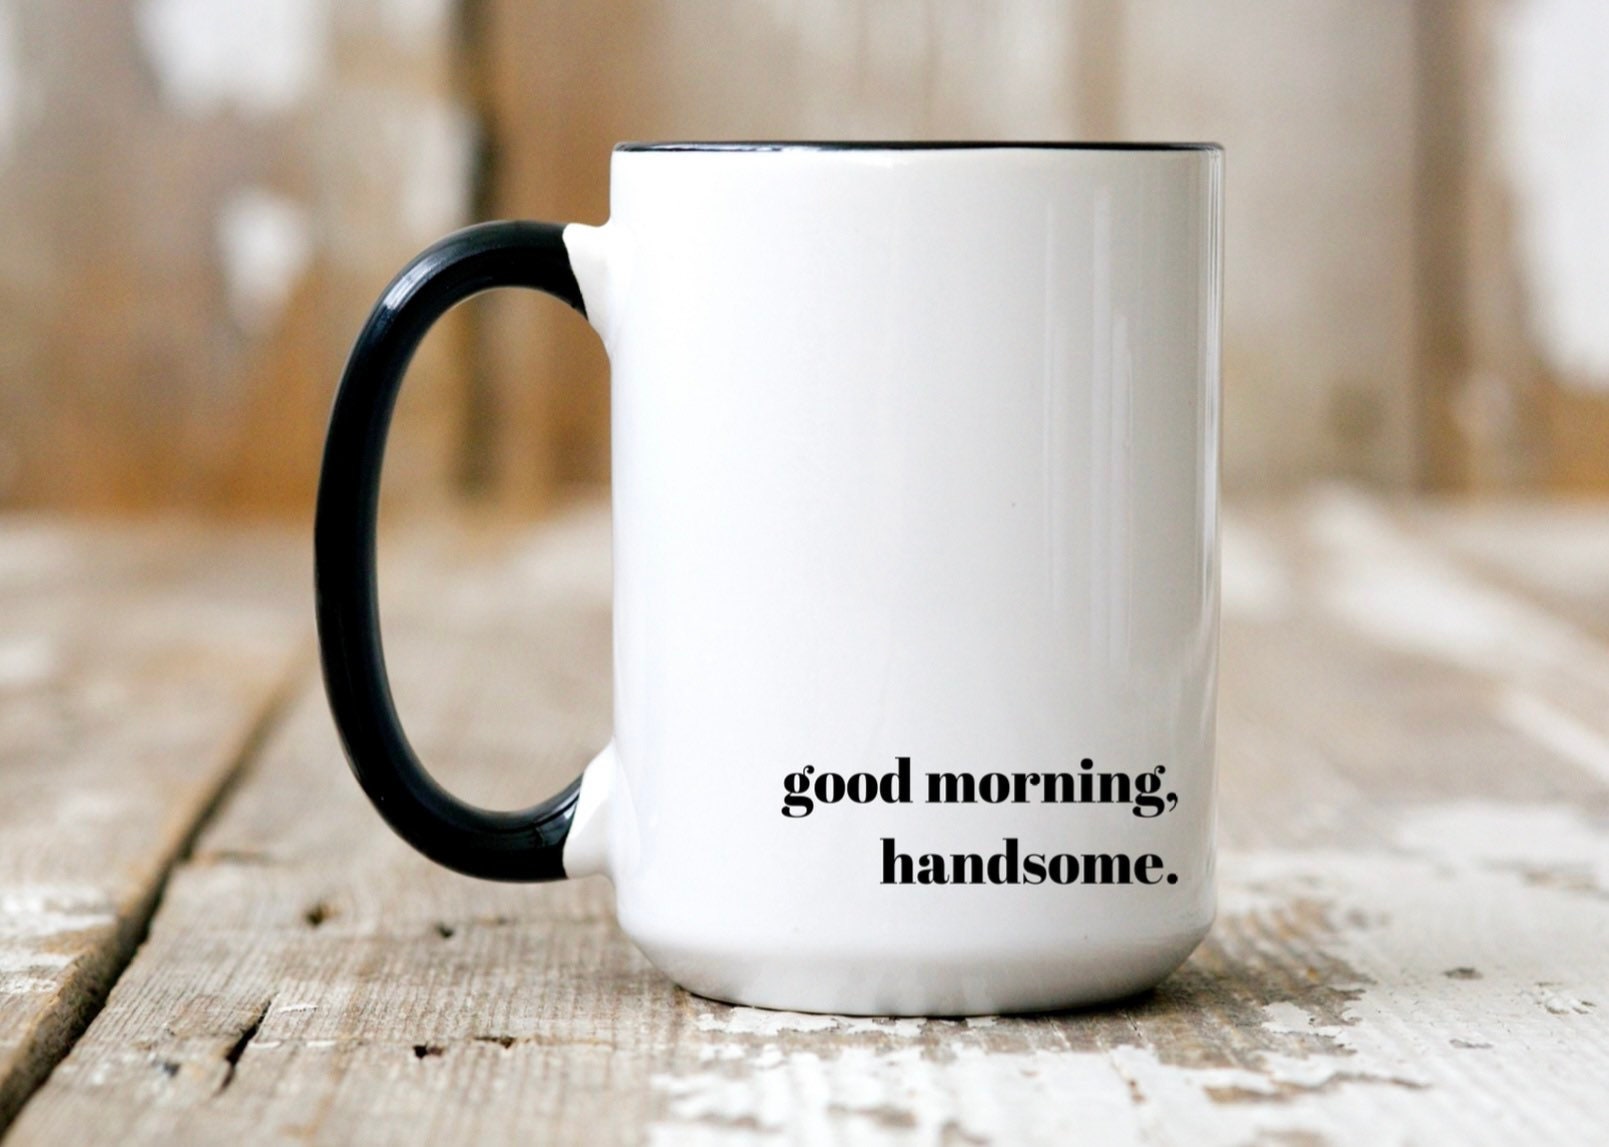 Real Men Drink Coffee Mug (Free Shipping*) – Great Mornings Coffee